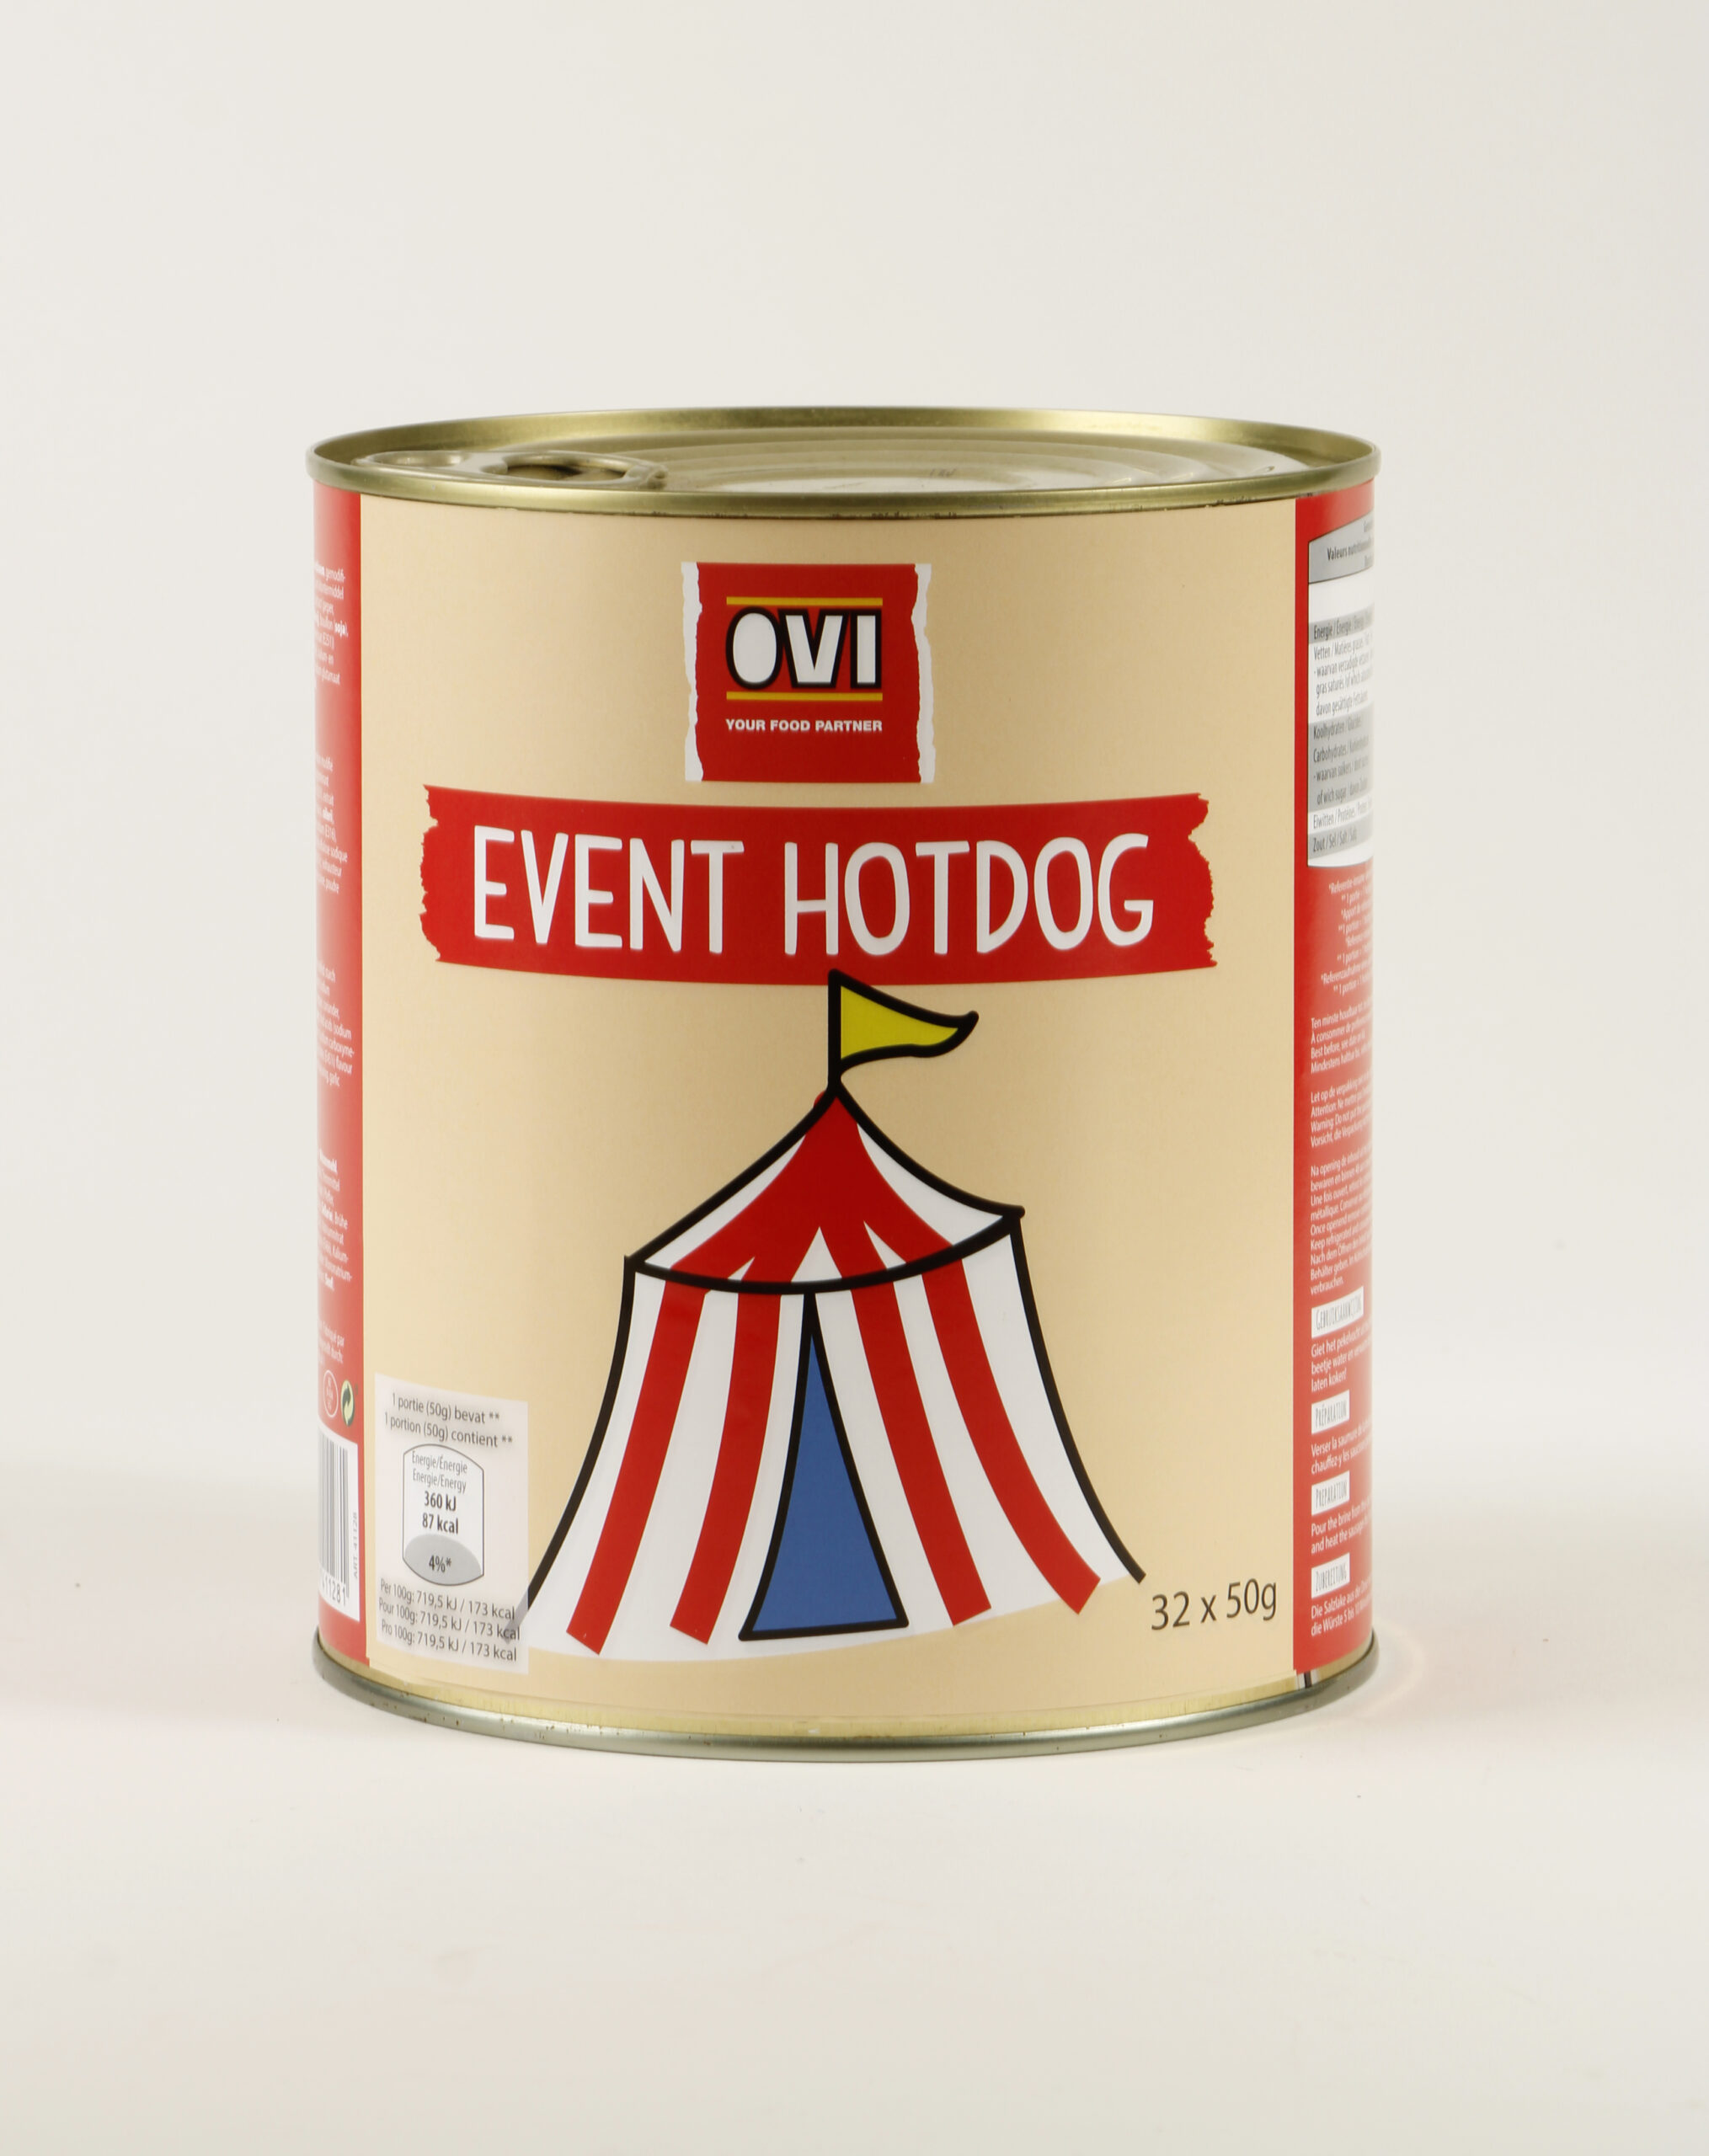 41128 Event Hotdog 32 X 50g Blik OVI